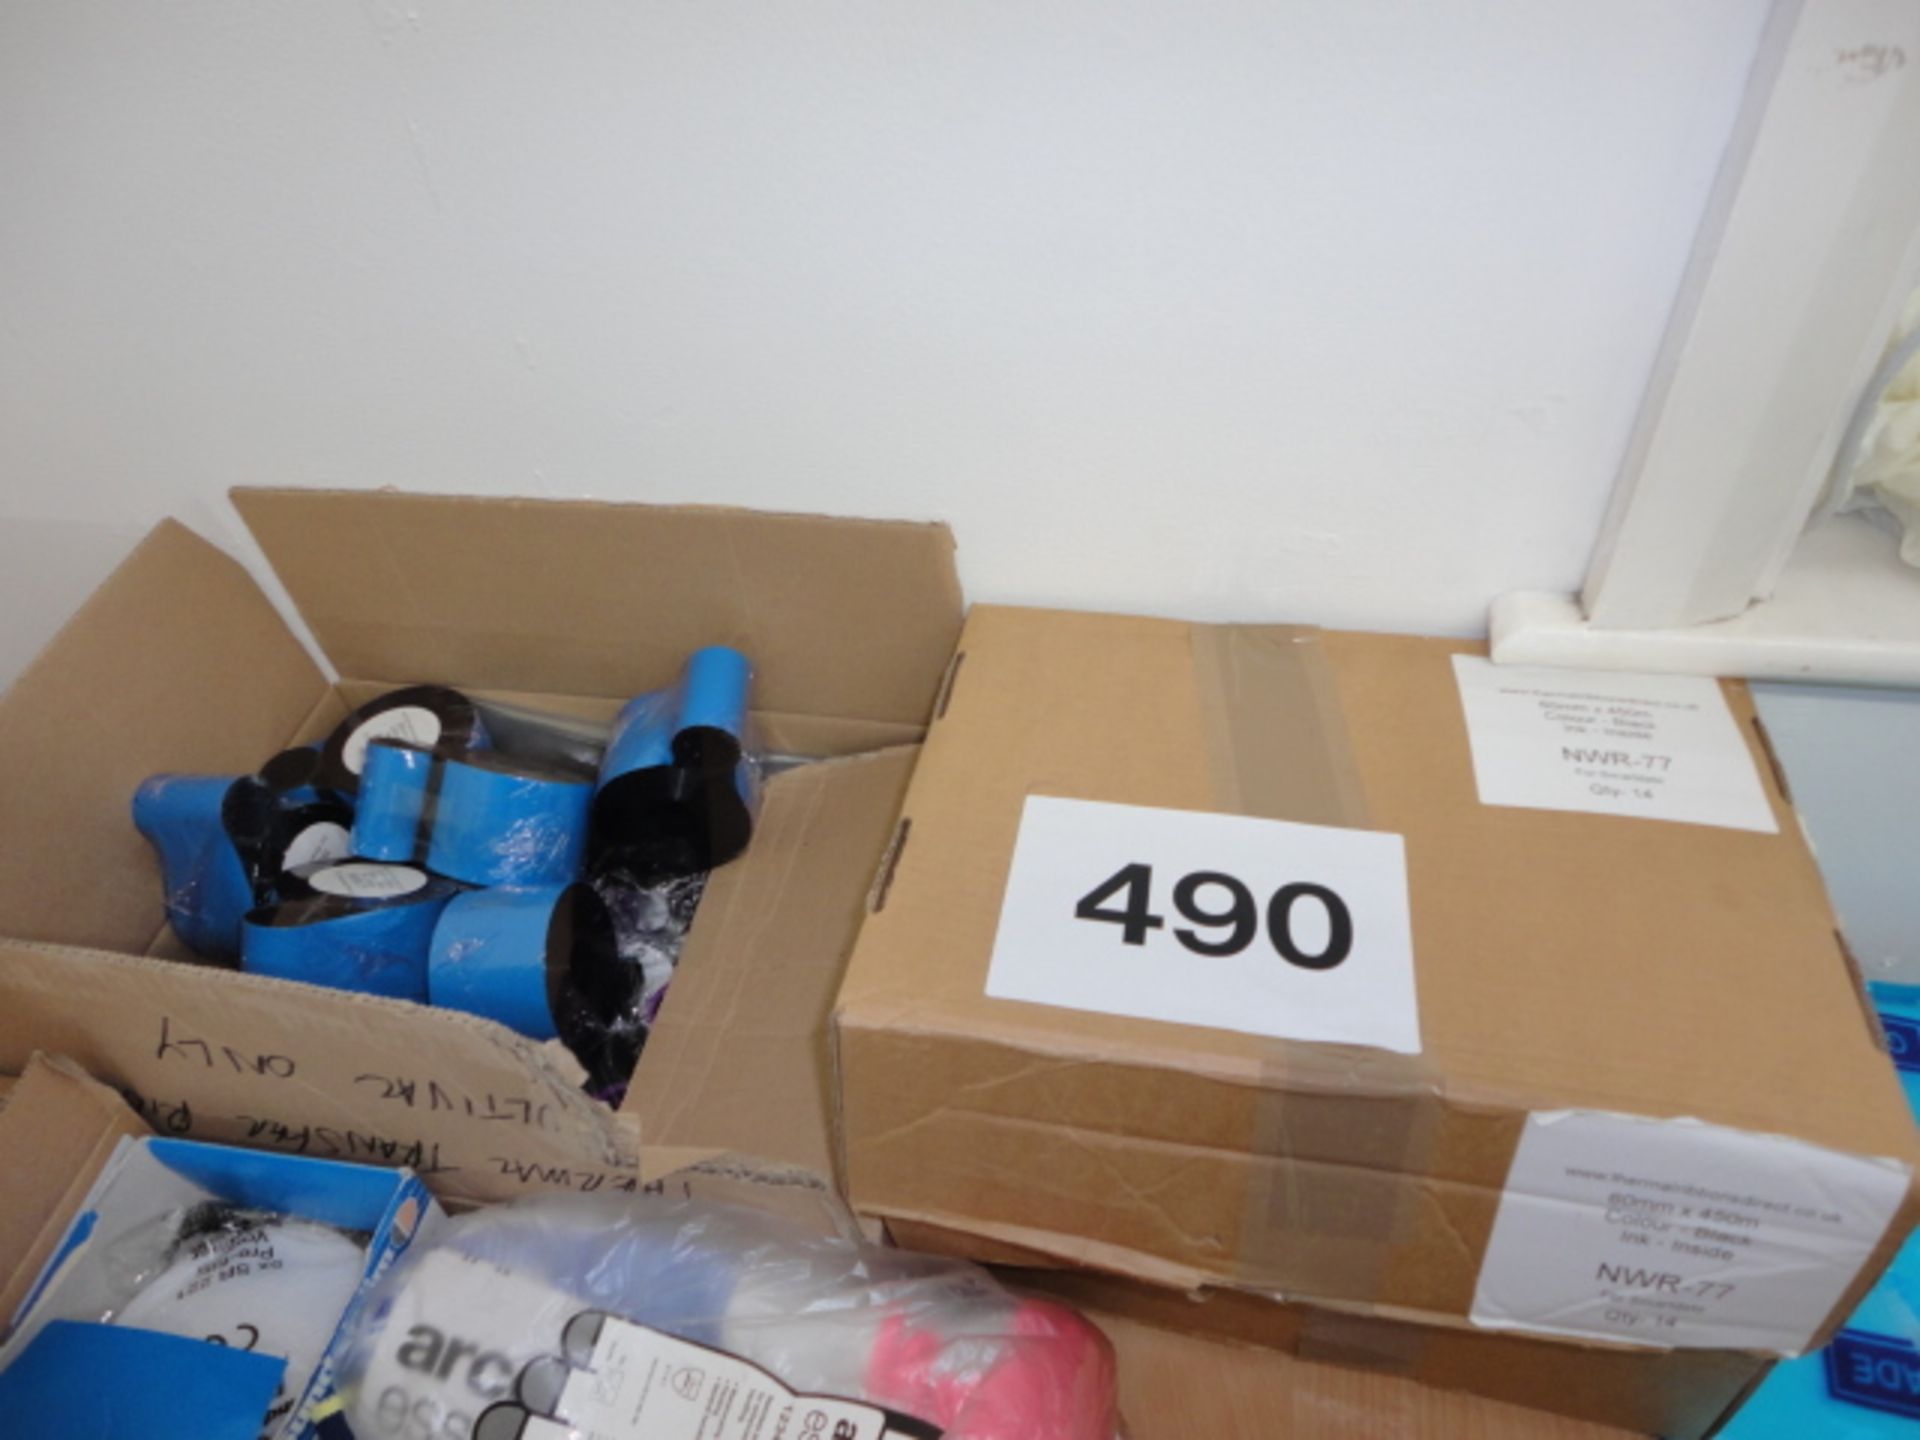 2 x Box of print head wipes, Thermal printer ribbons x 3 boxes 60x50 model NWR-77 blackLIFT OUT £5